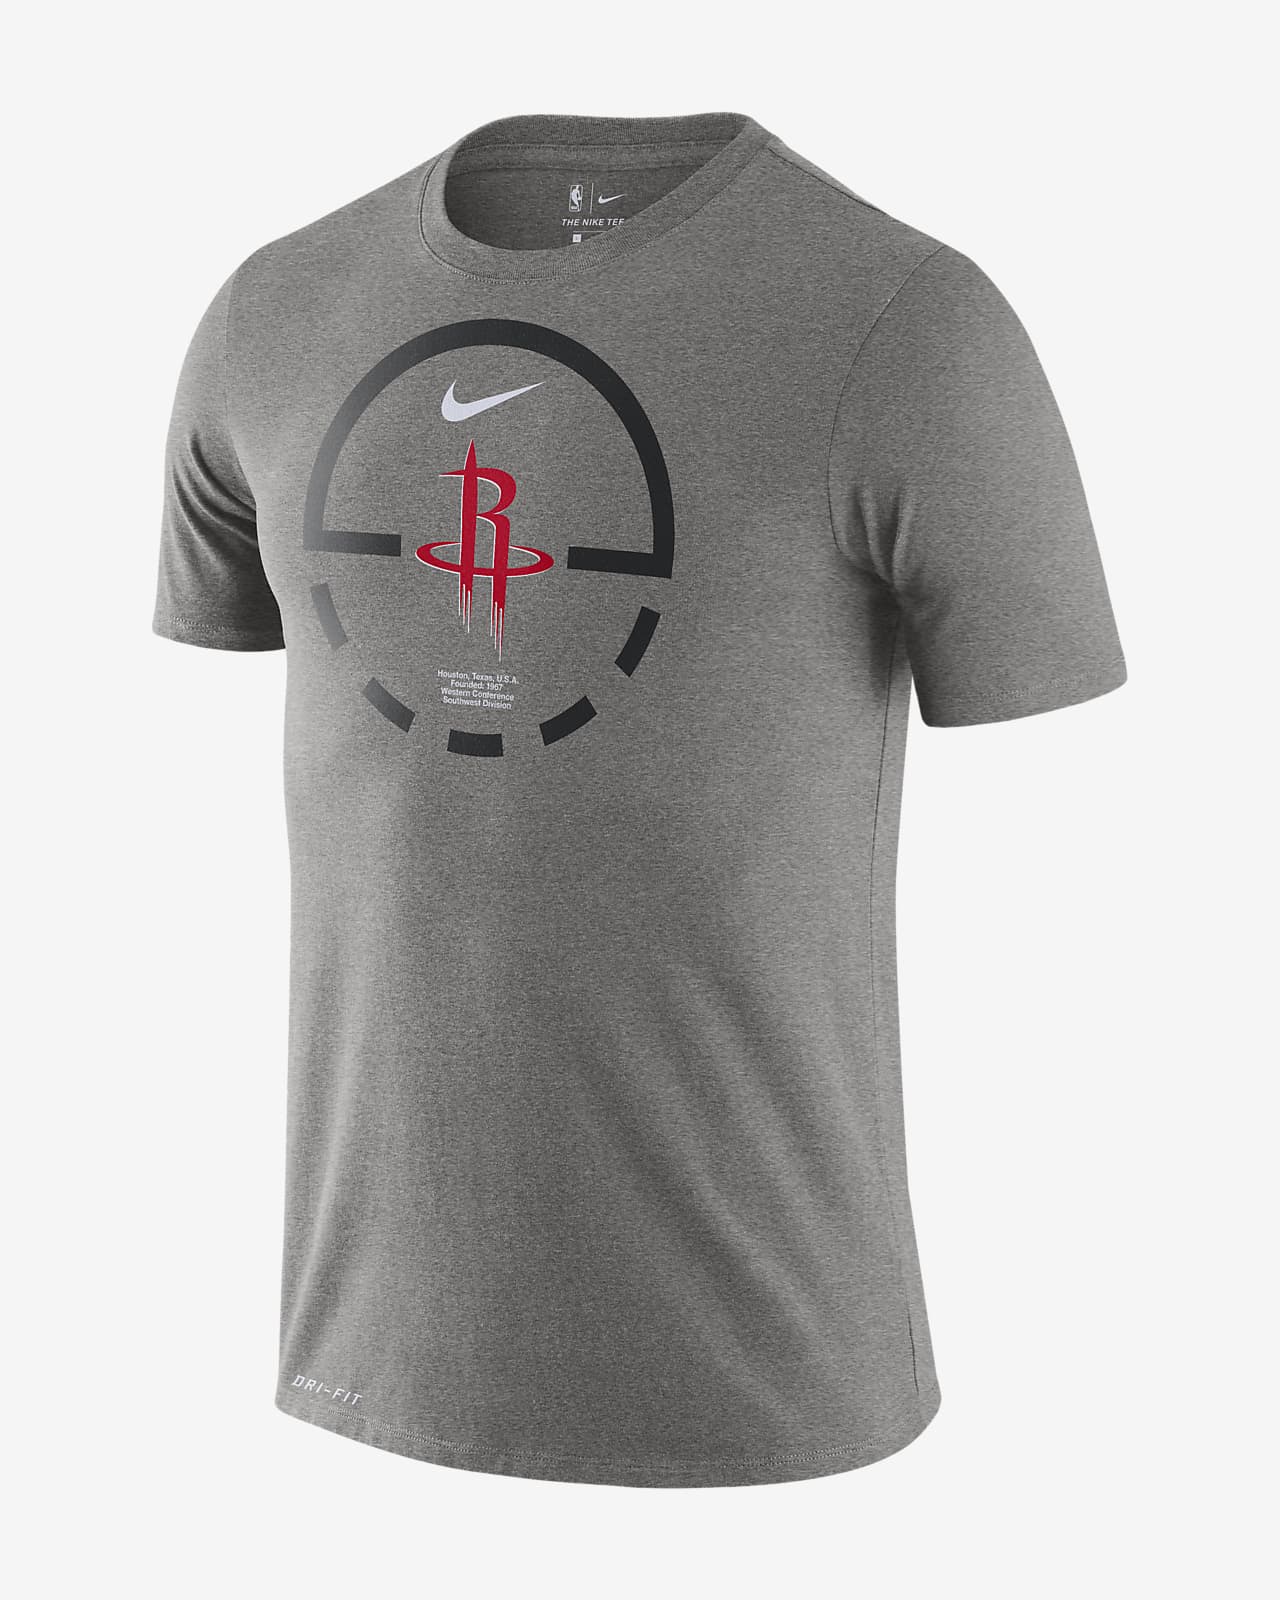 Houston Rockets Men's Nike Dri-FIT NBA T-Shirt